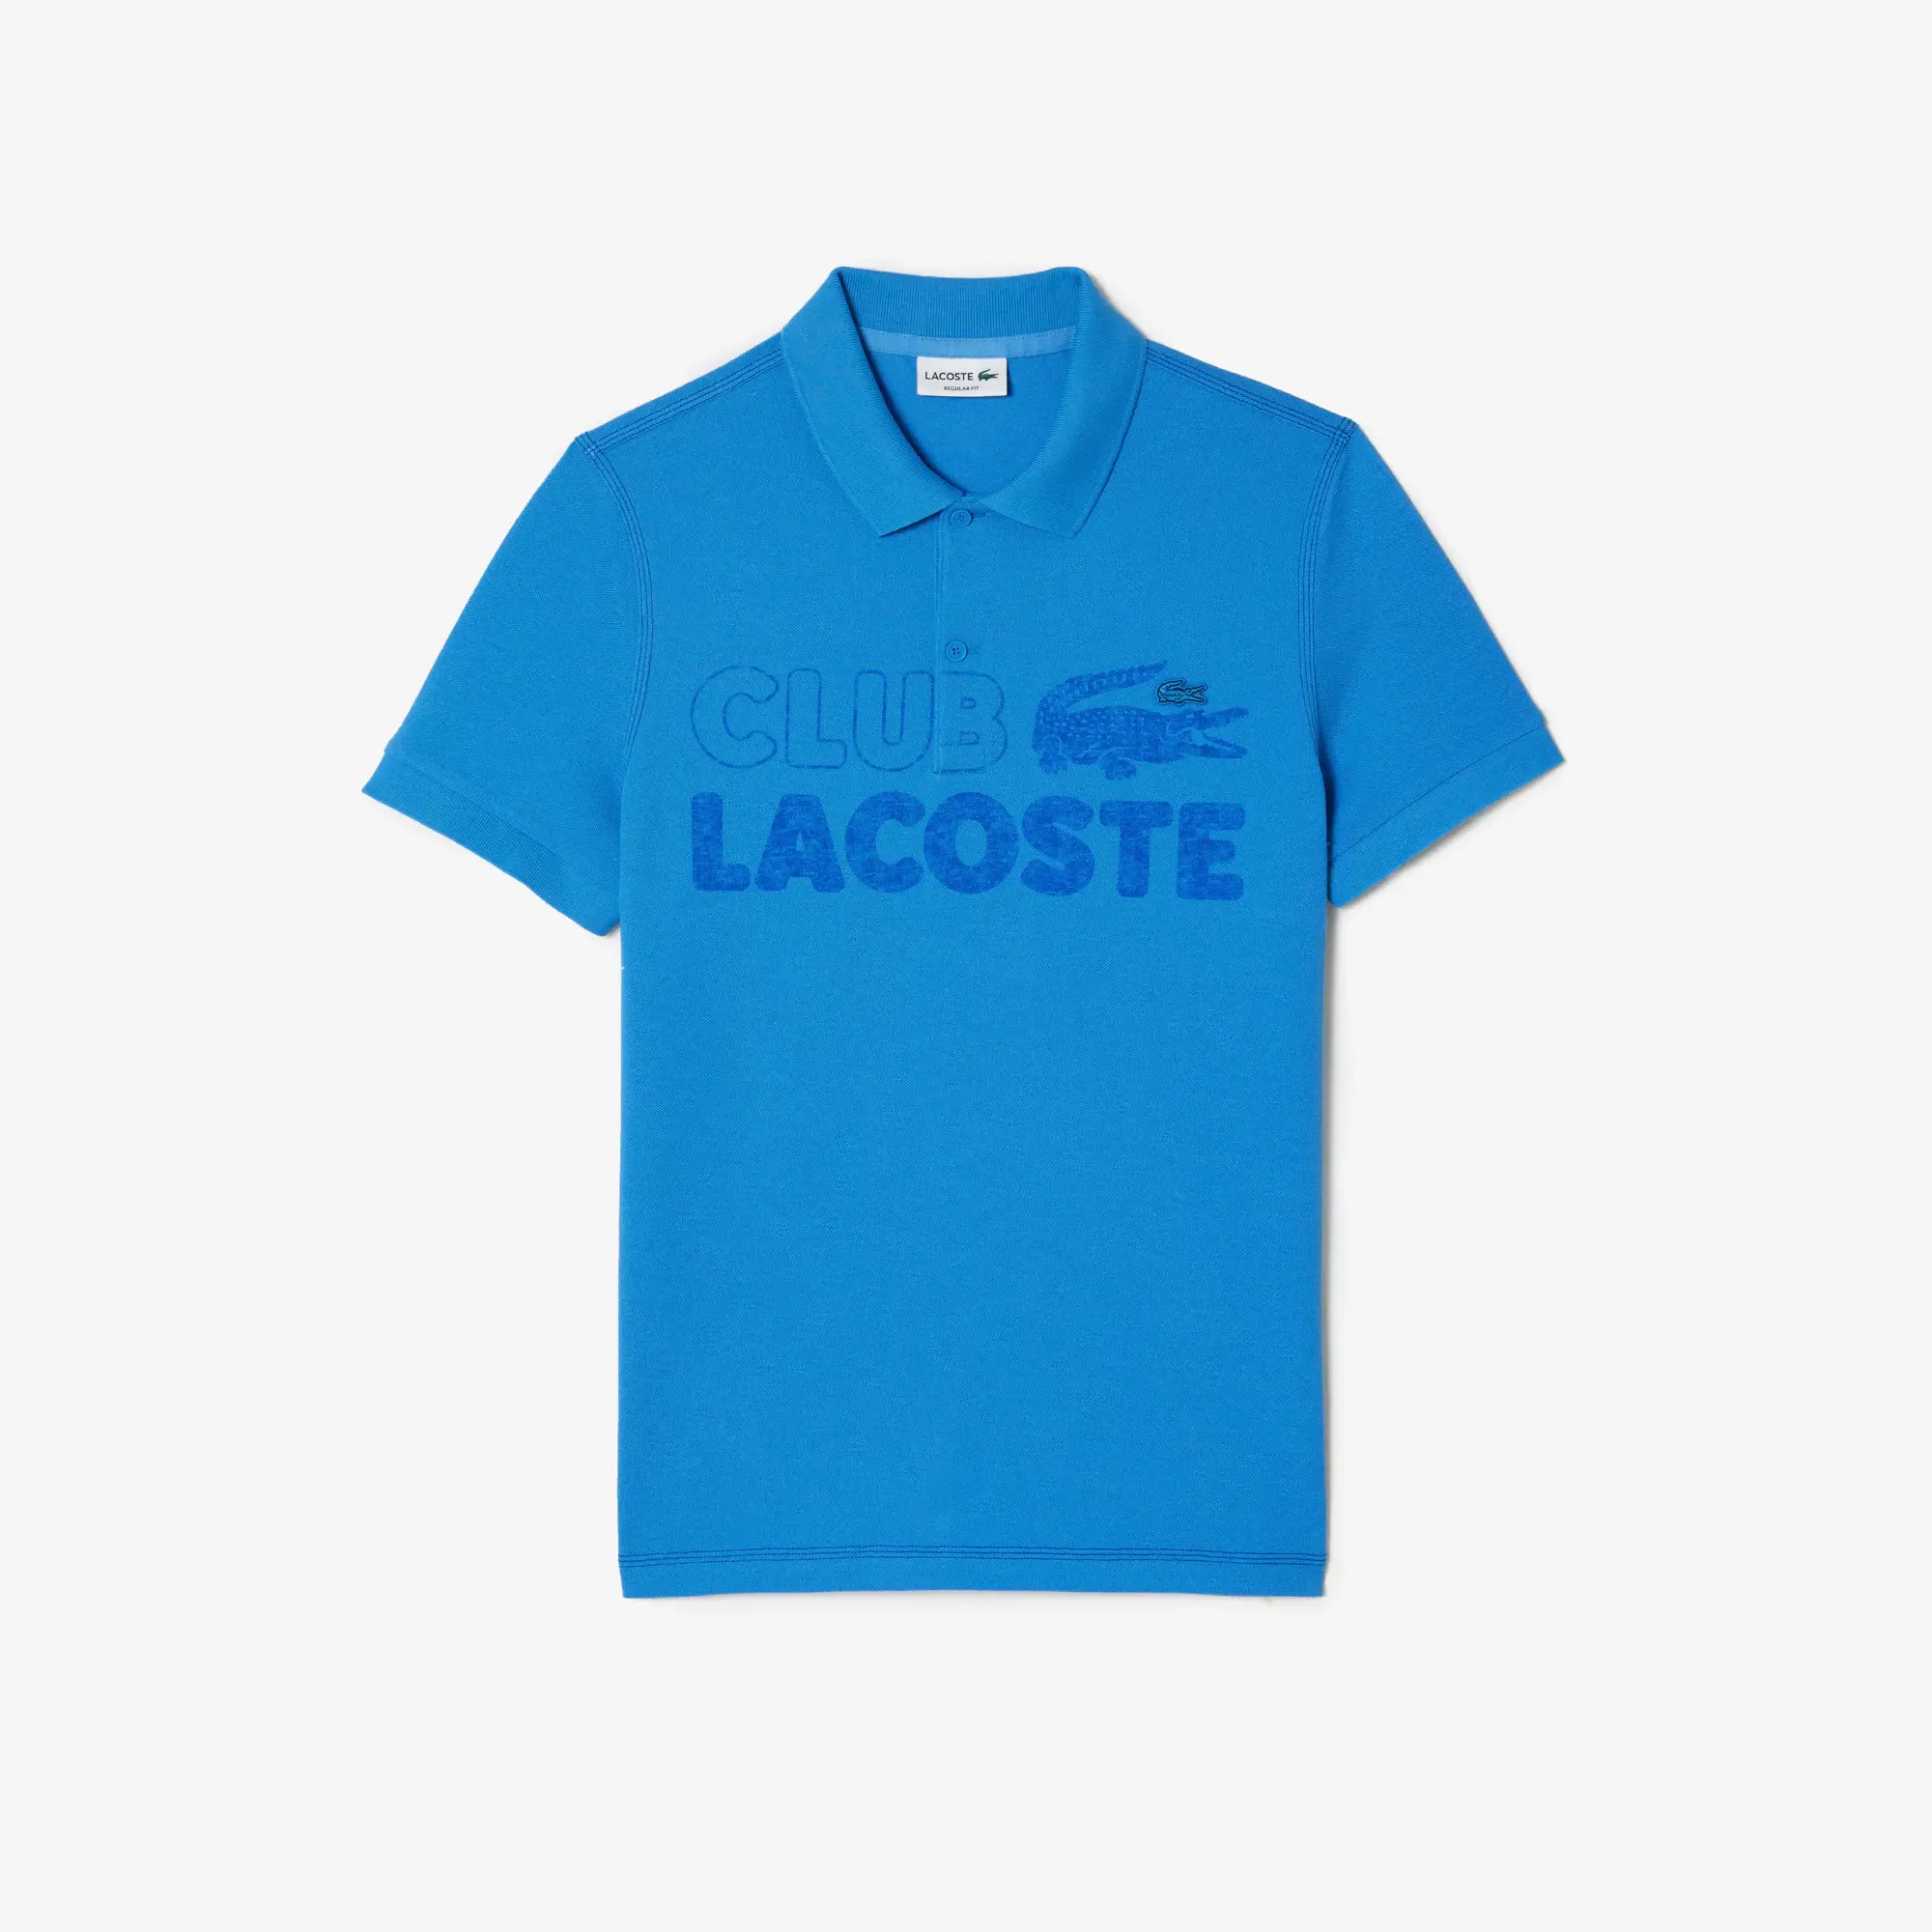 Lacoste Men’s Organic Cotton Printed Polo. 2